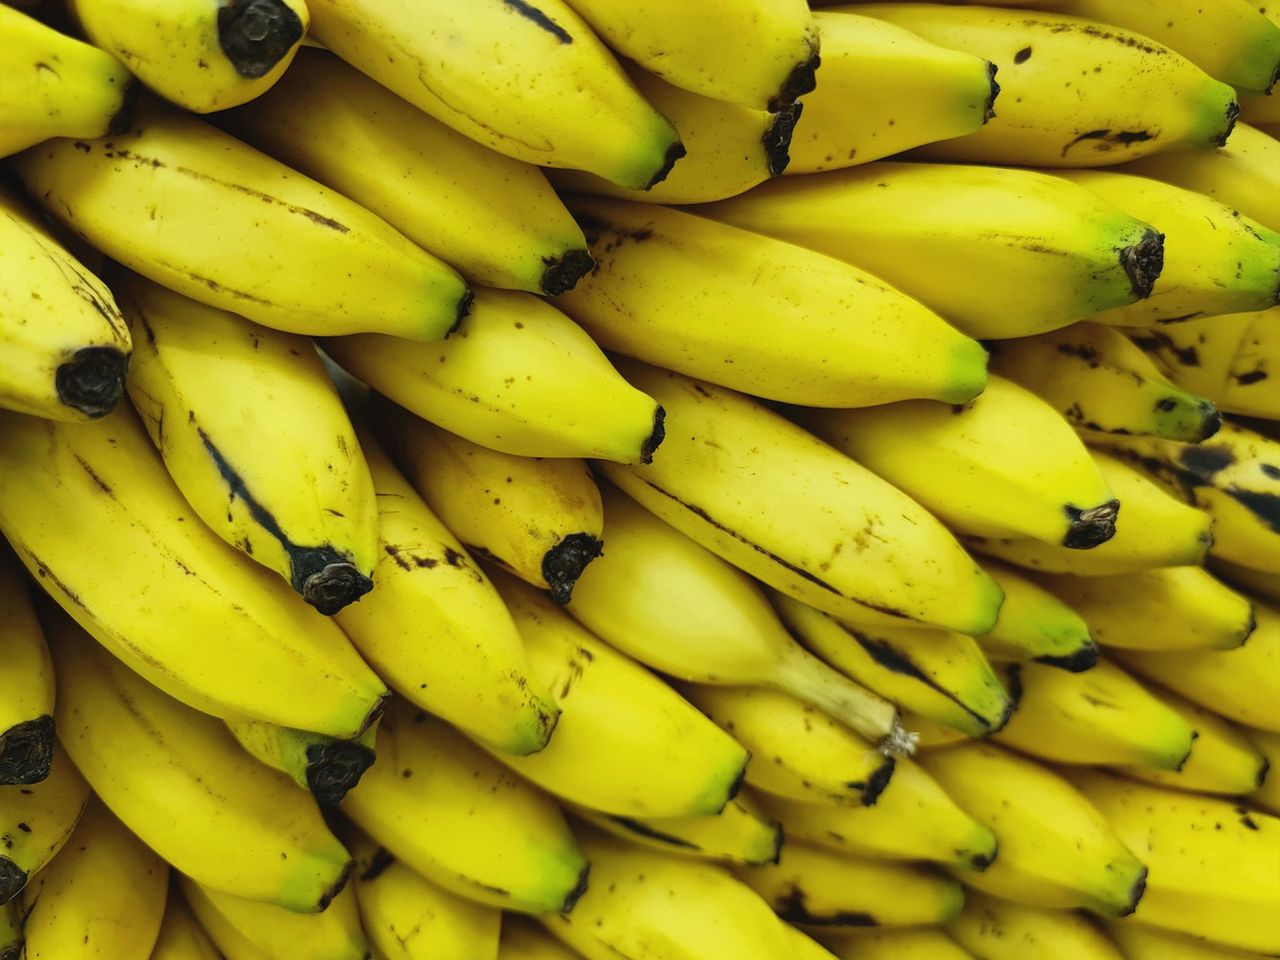 Unsafe banana consumption. Revealing the hidden risks of the microspore fungus